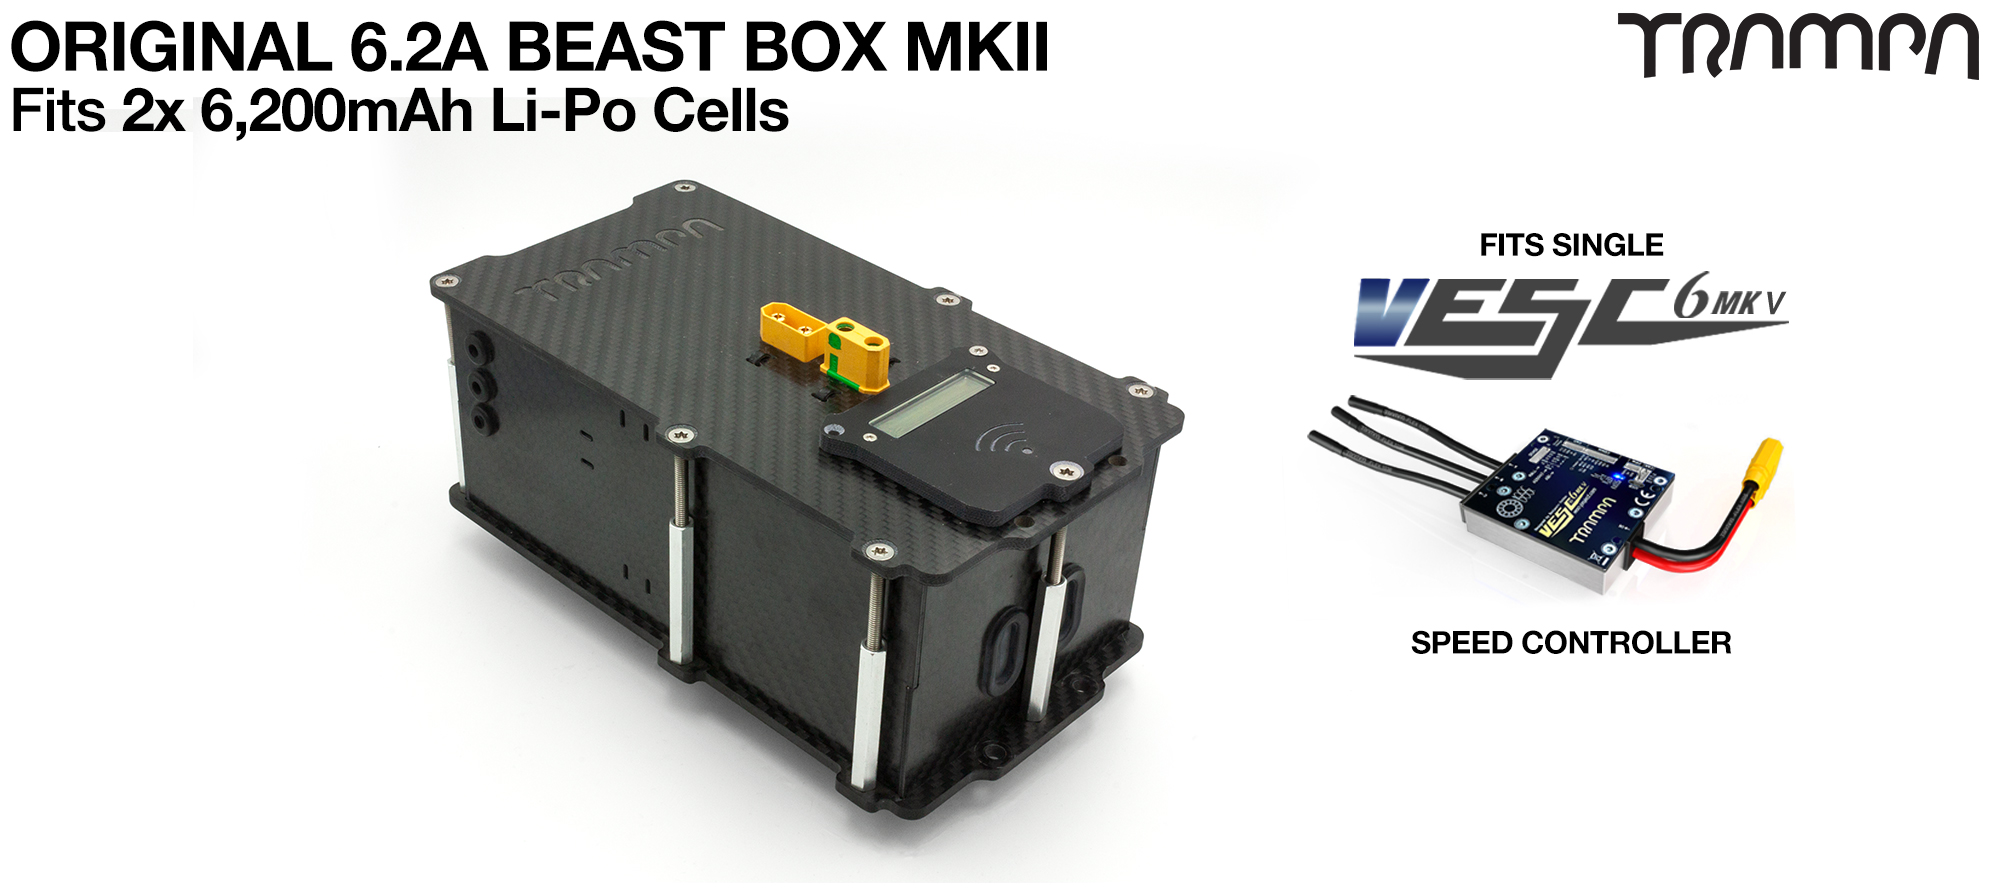 MkII 6.2Ah BEAST Box fits 2x Zippy Compact 6200 mAh cells with Internal VESC Housing 